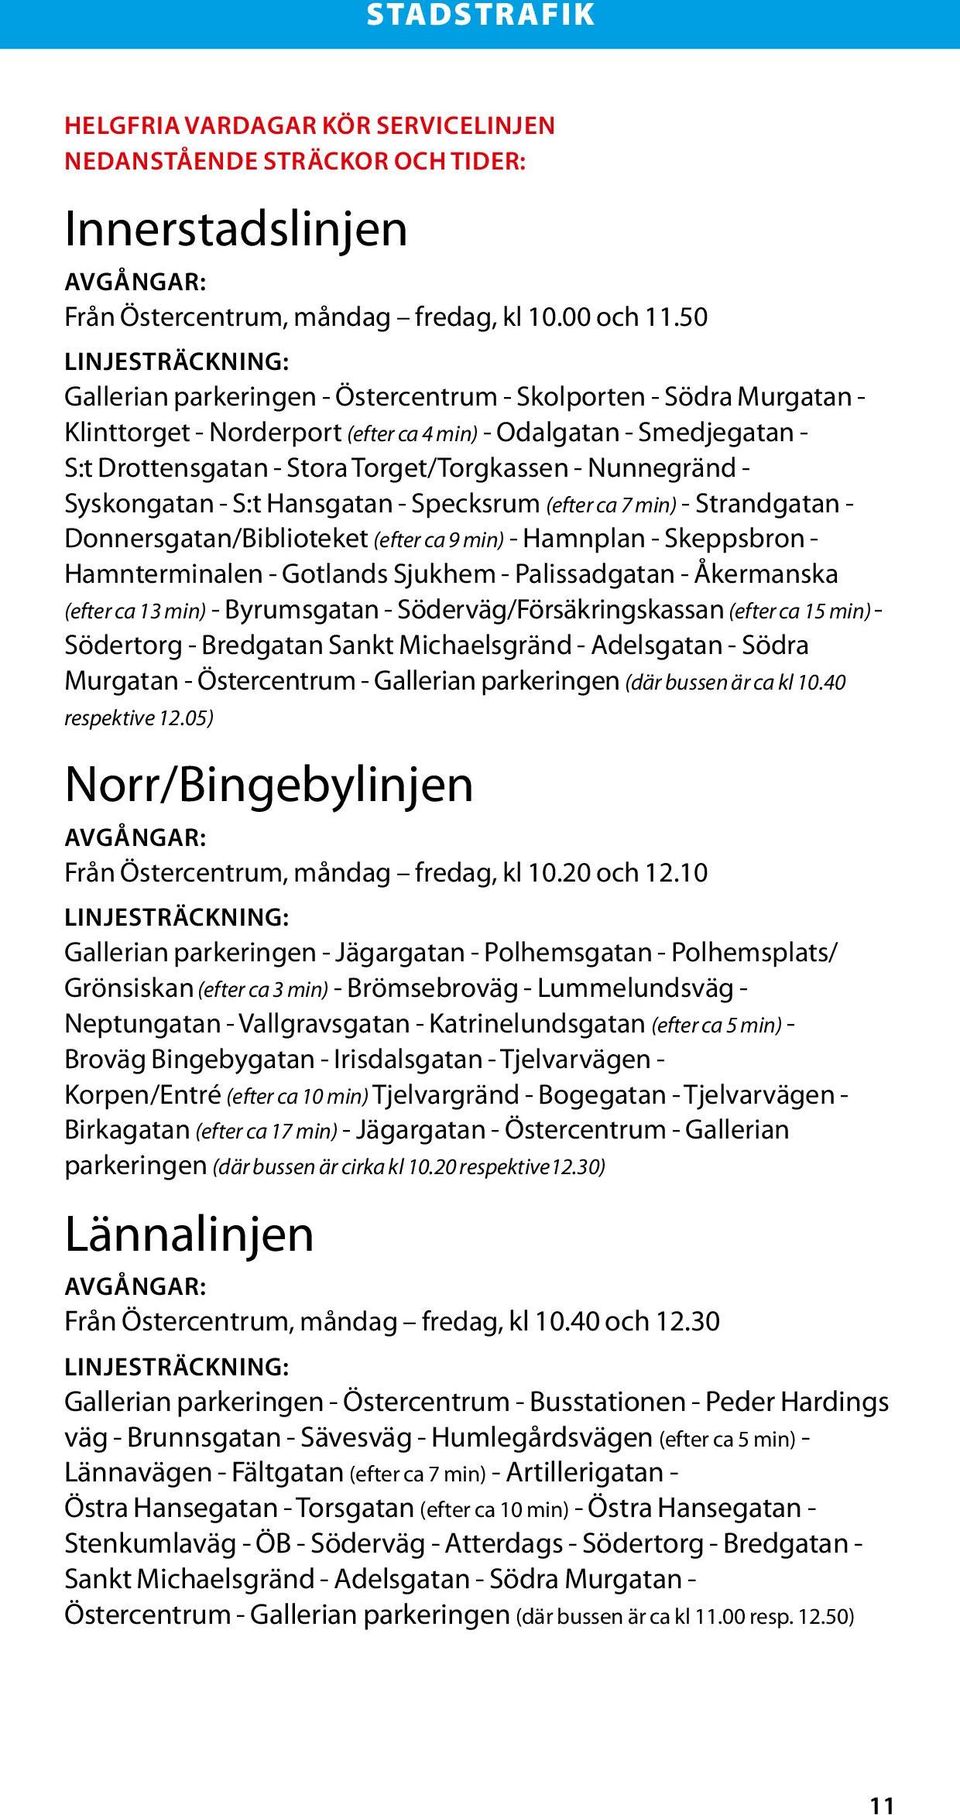 gränd - Syskongtn - S:t Hnsgtn - Specksrum (efter c 7 min) - Strnd gtn - Donnersgtn/Biblioteket (efter c 9 min) - Hmnpln - Skeppsbron - Hmnterminlen - Gotlnds Sjukhem - Plissdgtn - Åkermnsk (efter c